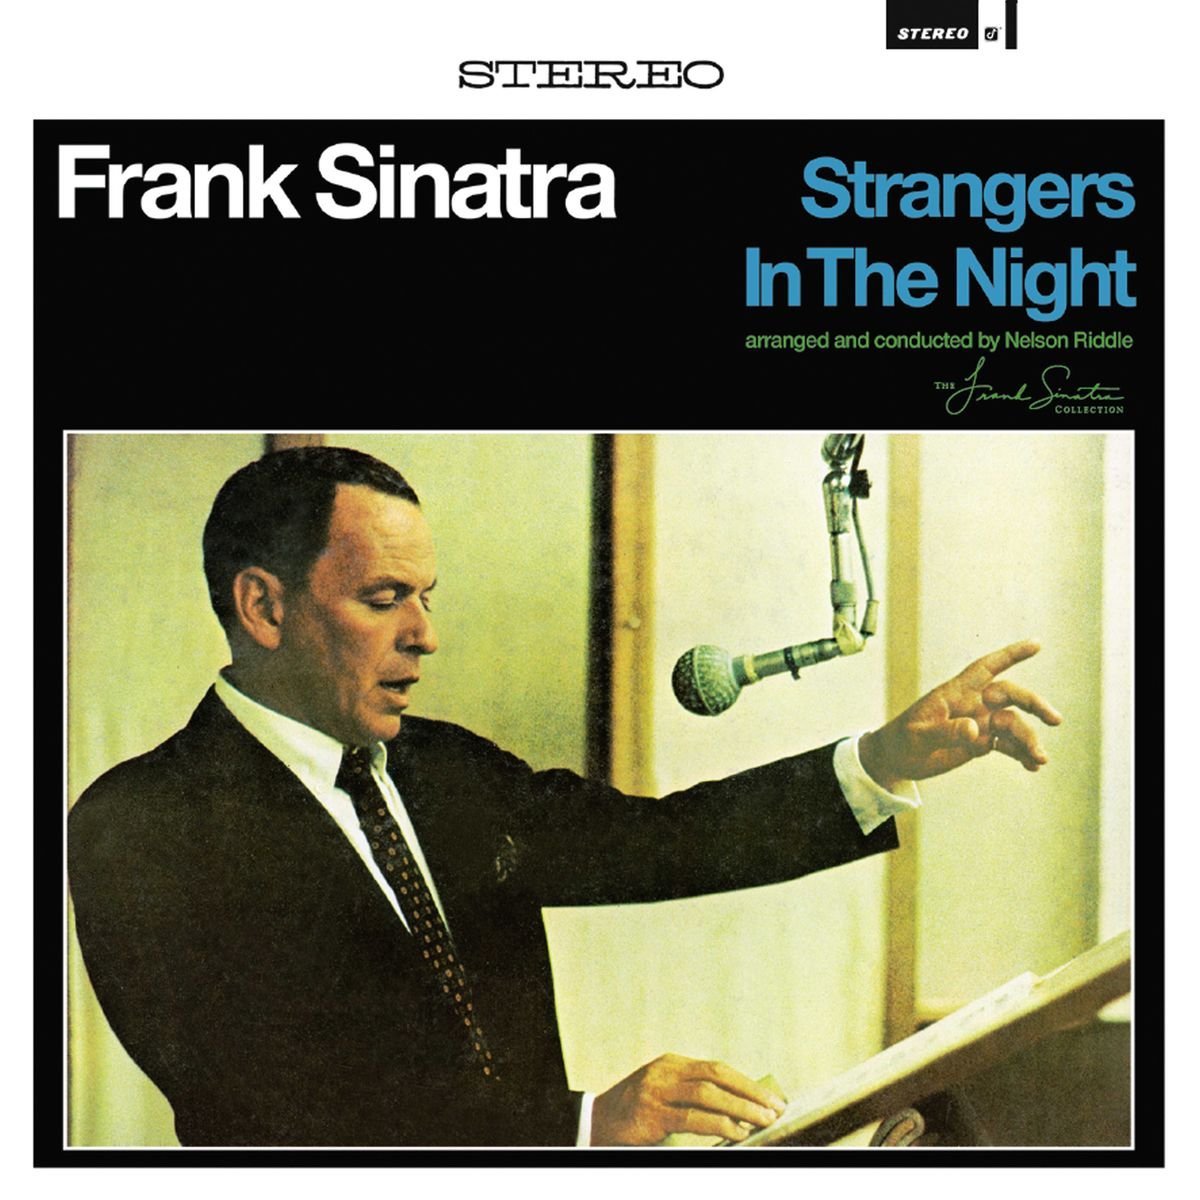 Frank Sinatra - Strangers In The Night - LP